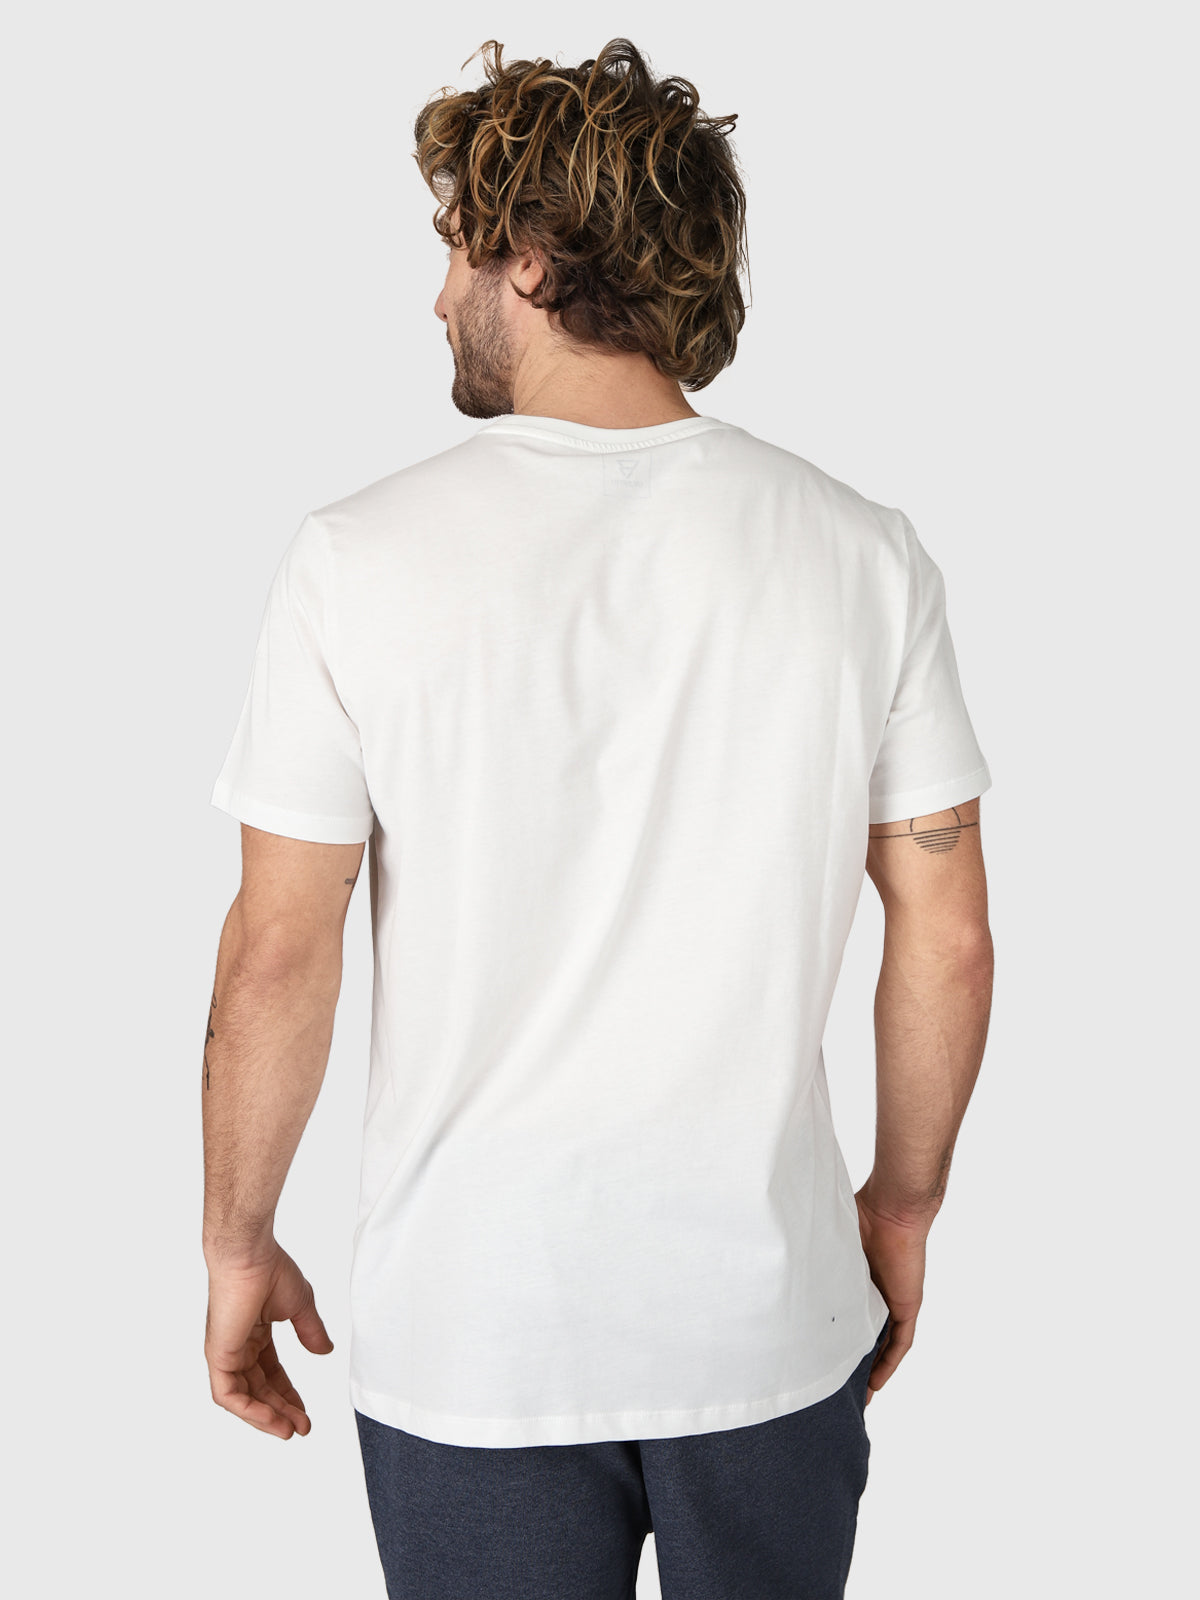 Funblock Herren T-Shirt | Weiß